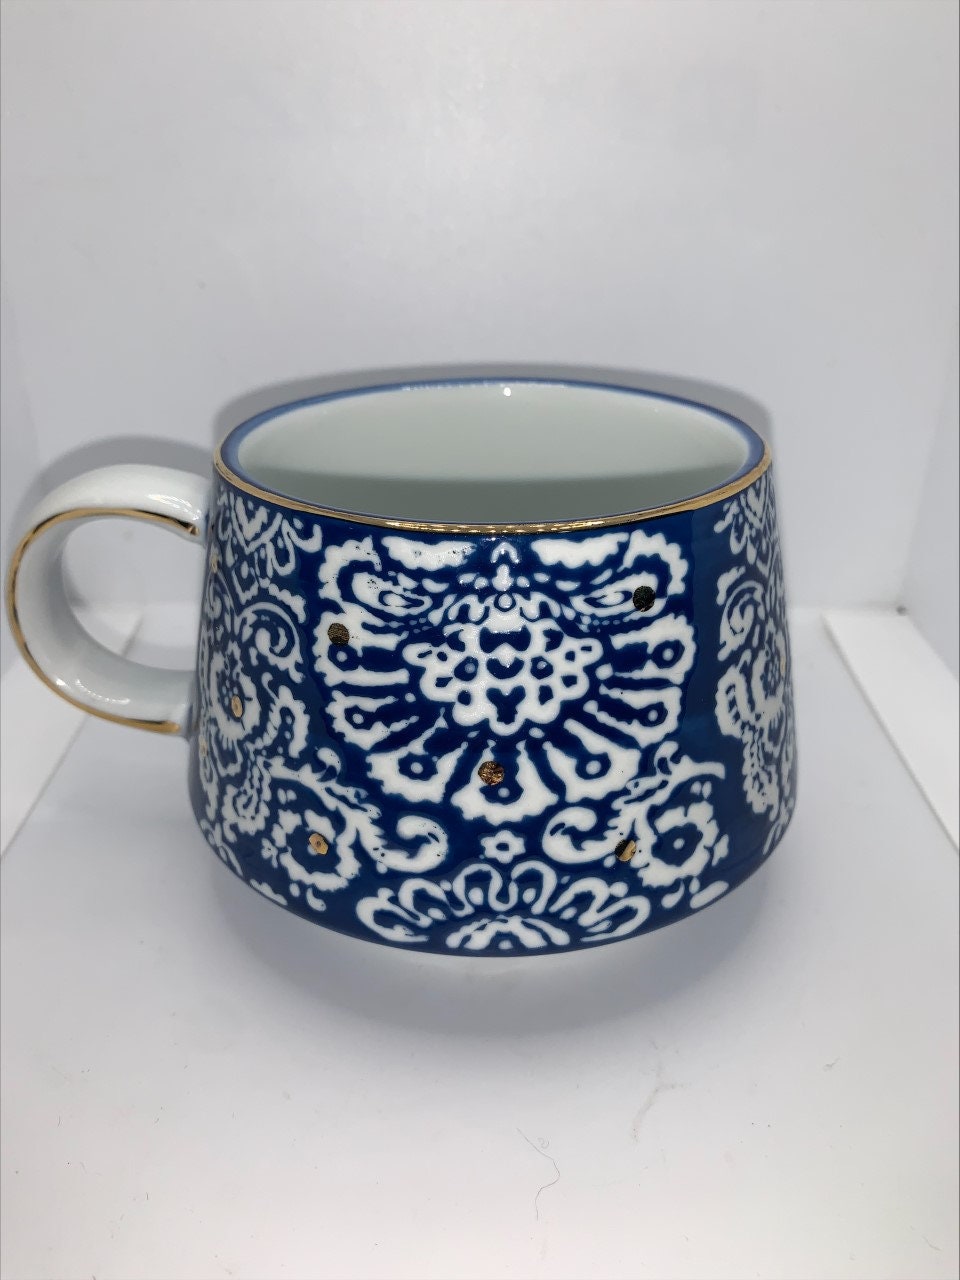 Paperproducts Design 602348 Reggie Gift Boxed Mug, 13.5 oz, Blue